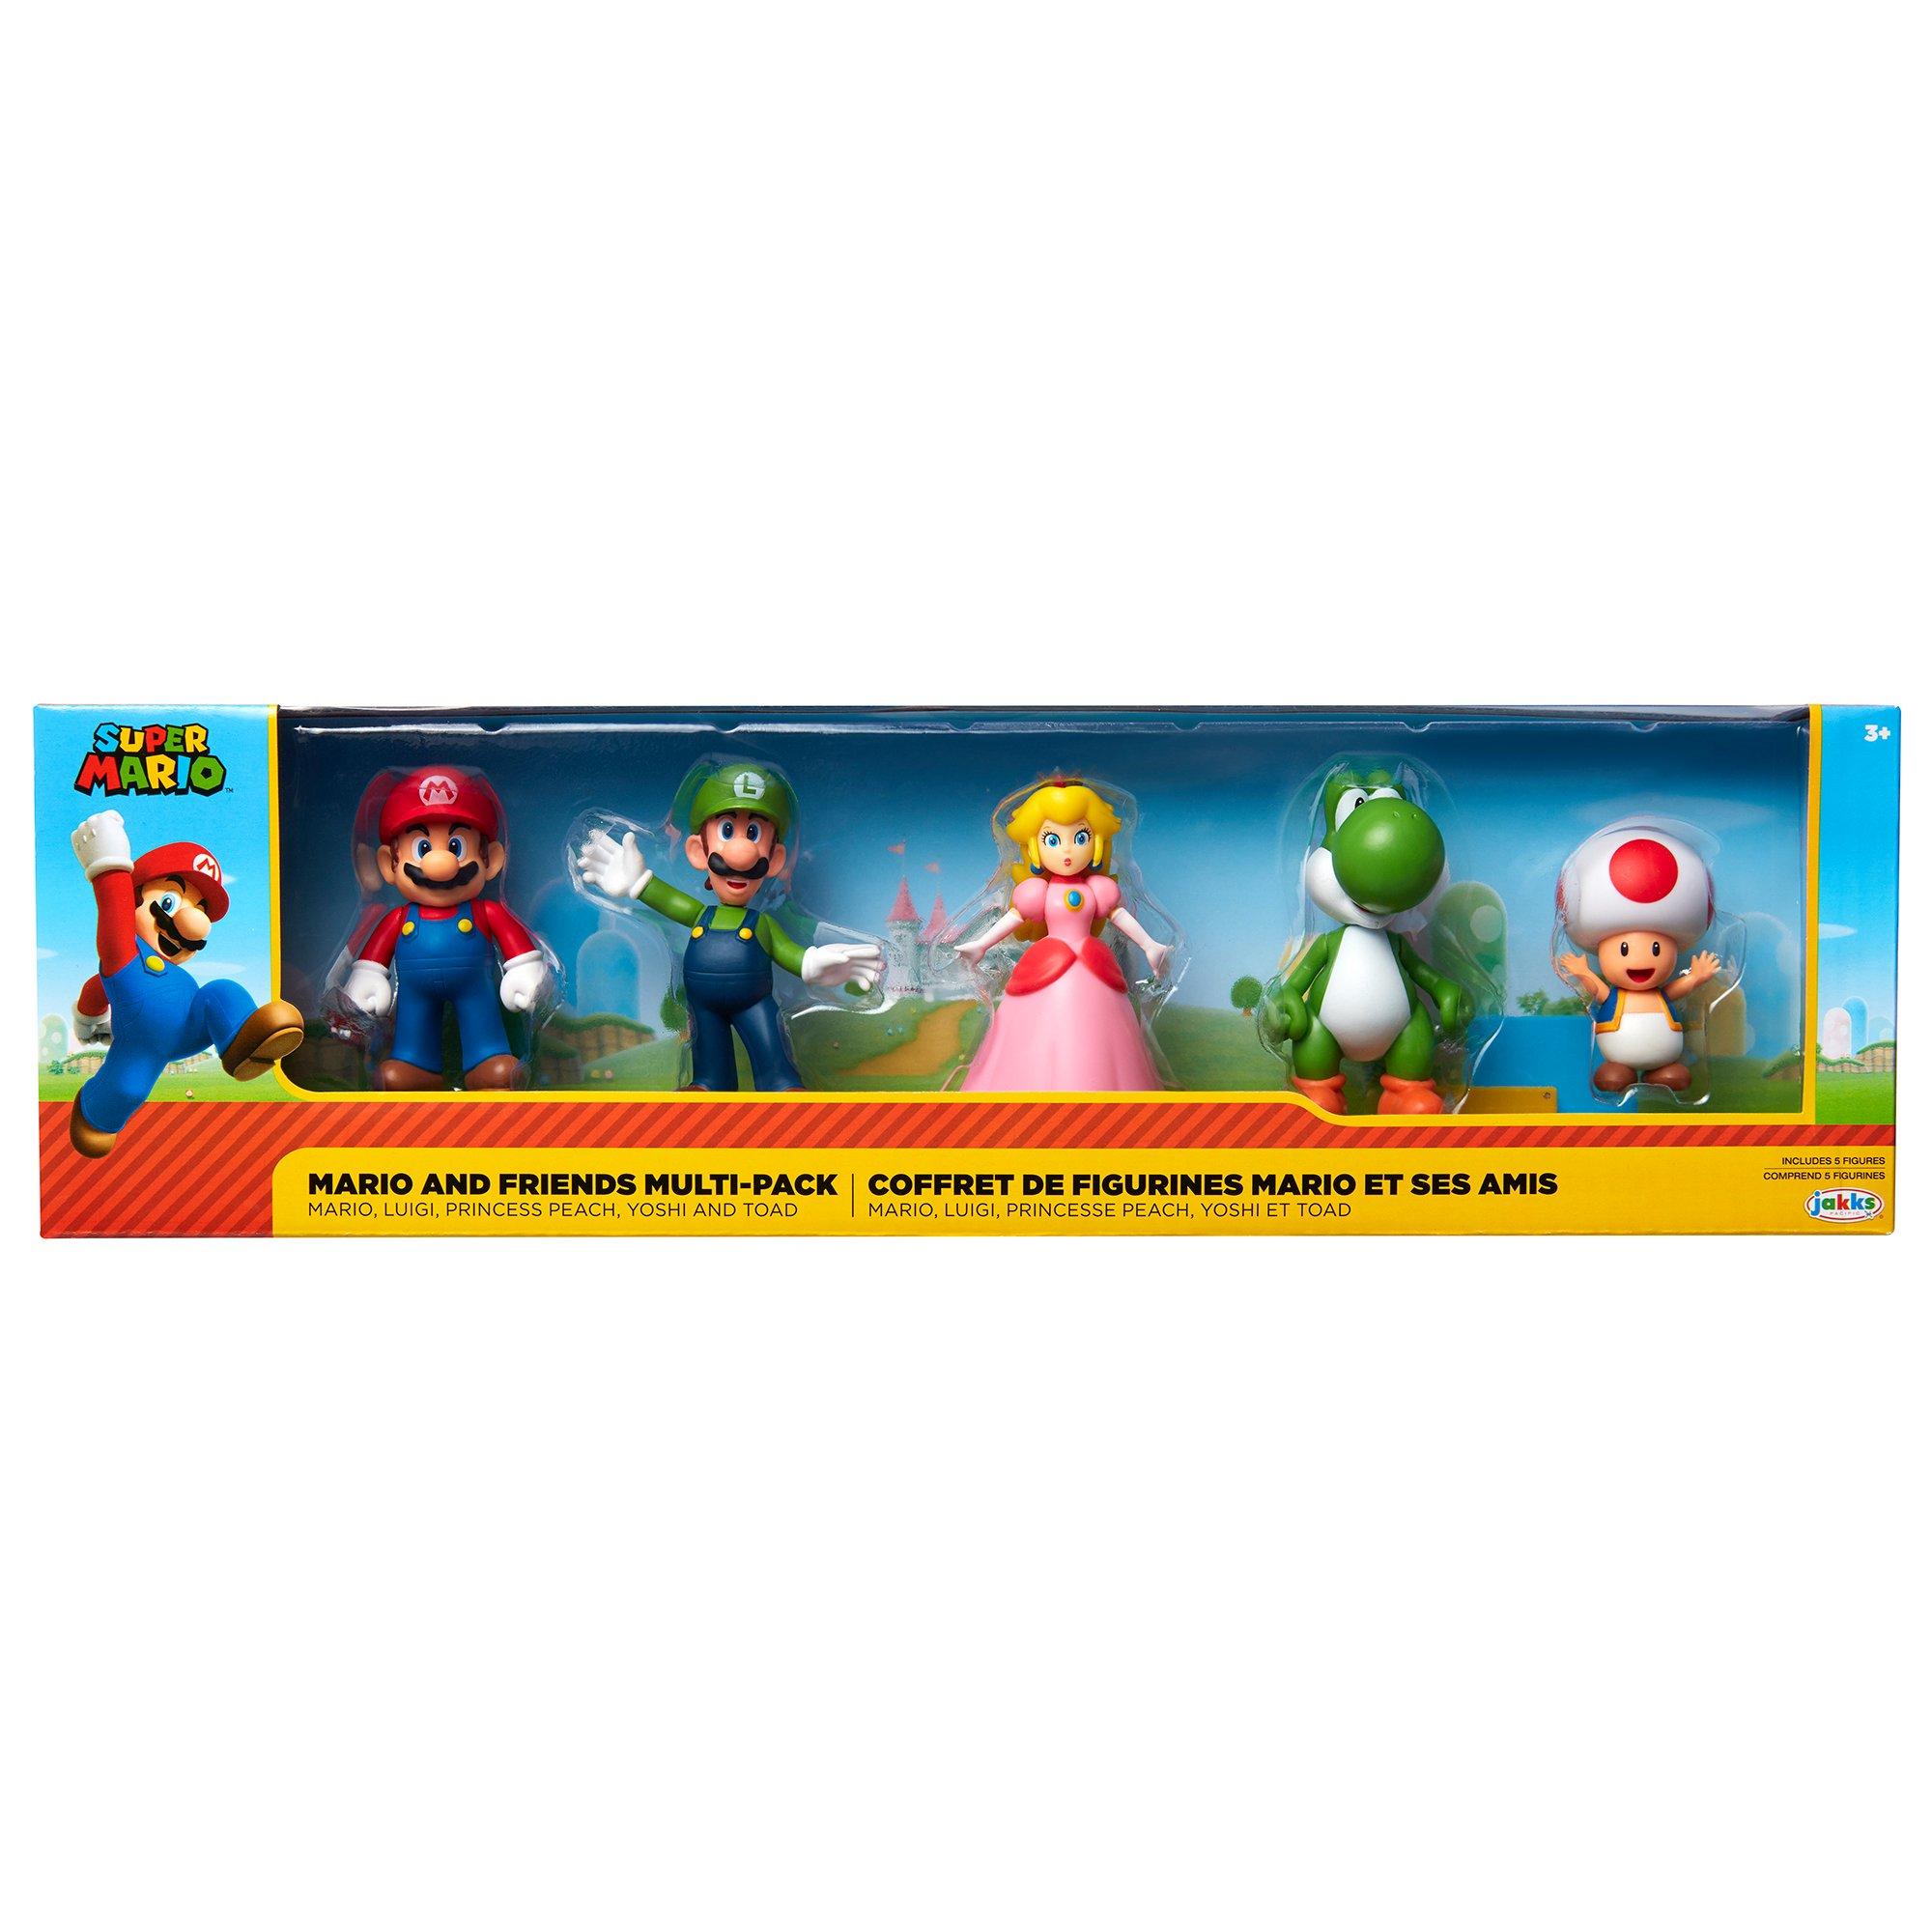 Jakks Pacific Super Mario Bros. Mario and Friends MultiPack Action Figures